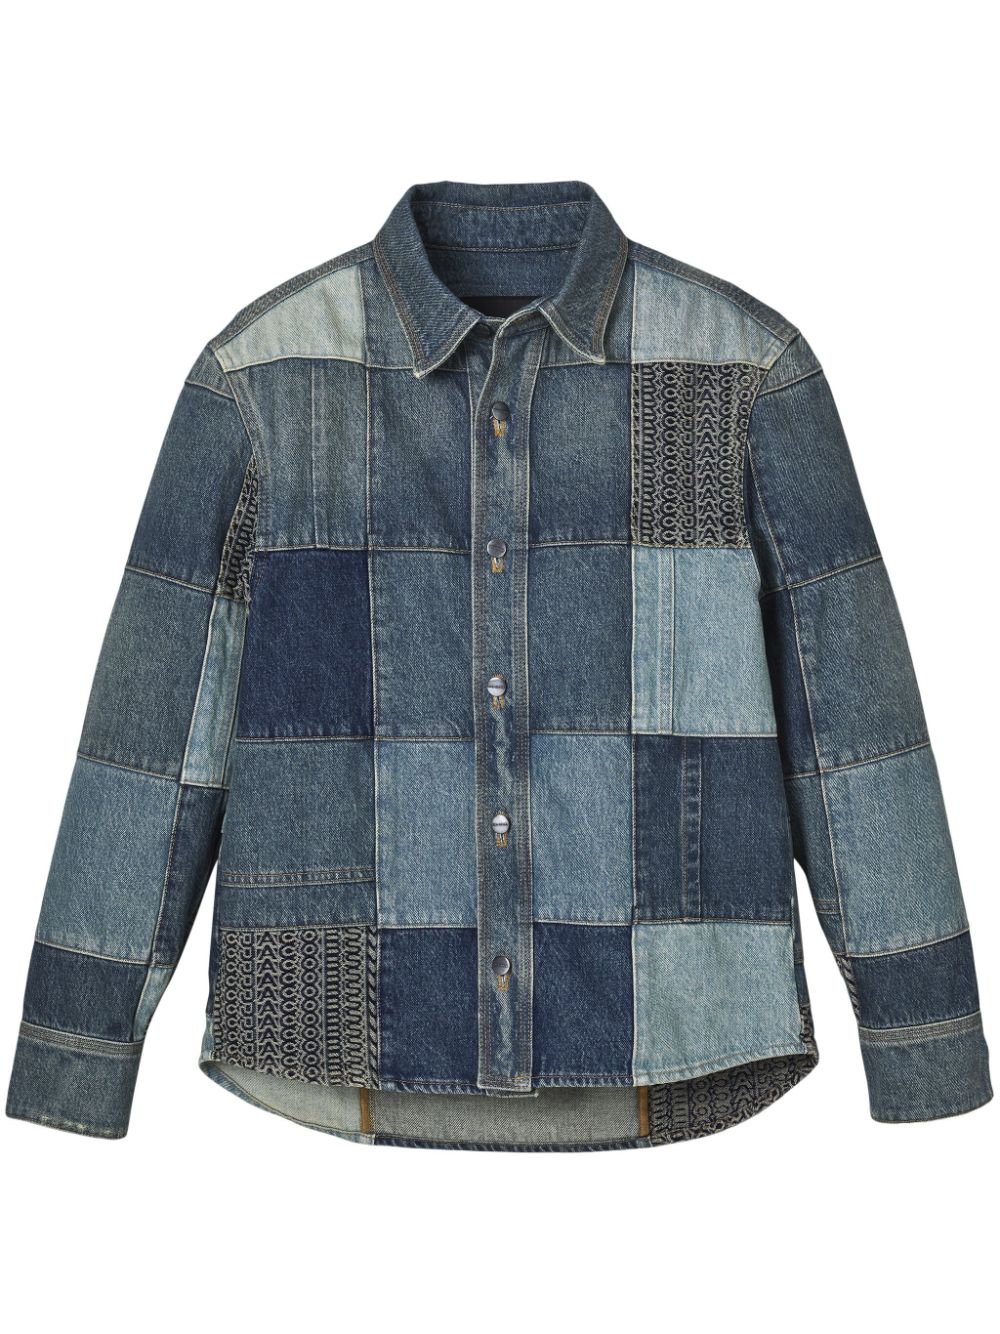 Marc Jacobs patchwork denim shirt - Blau von Marc Jacobs